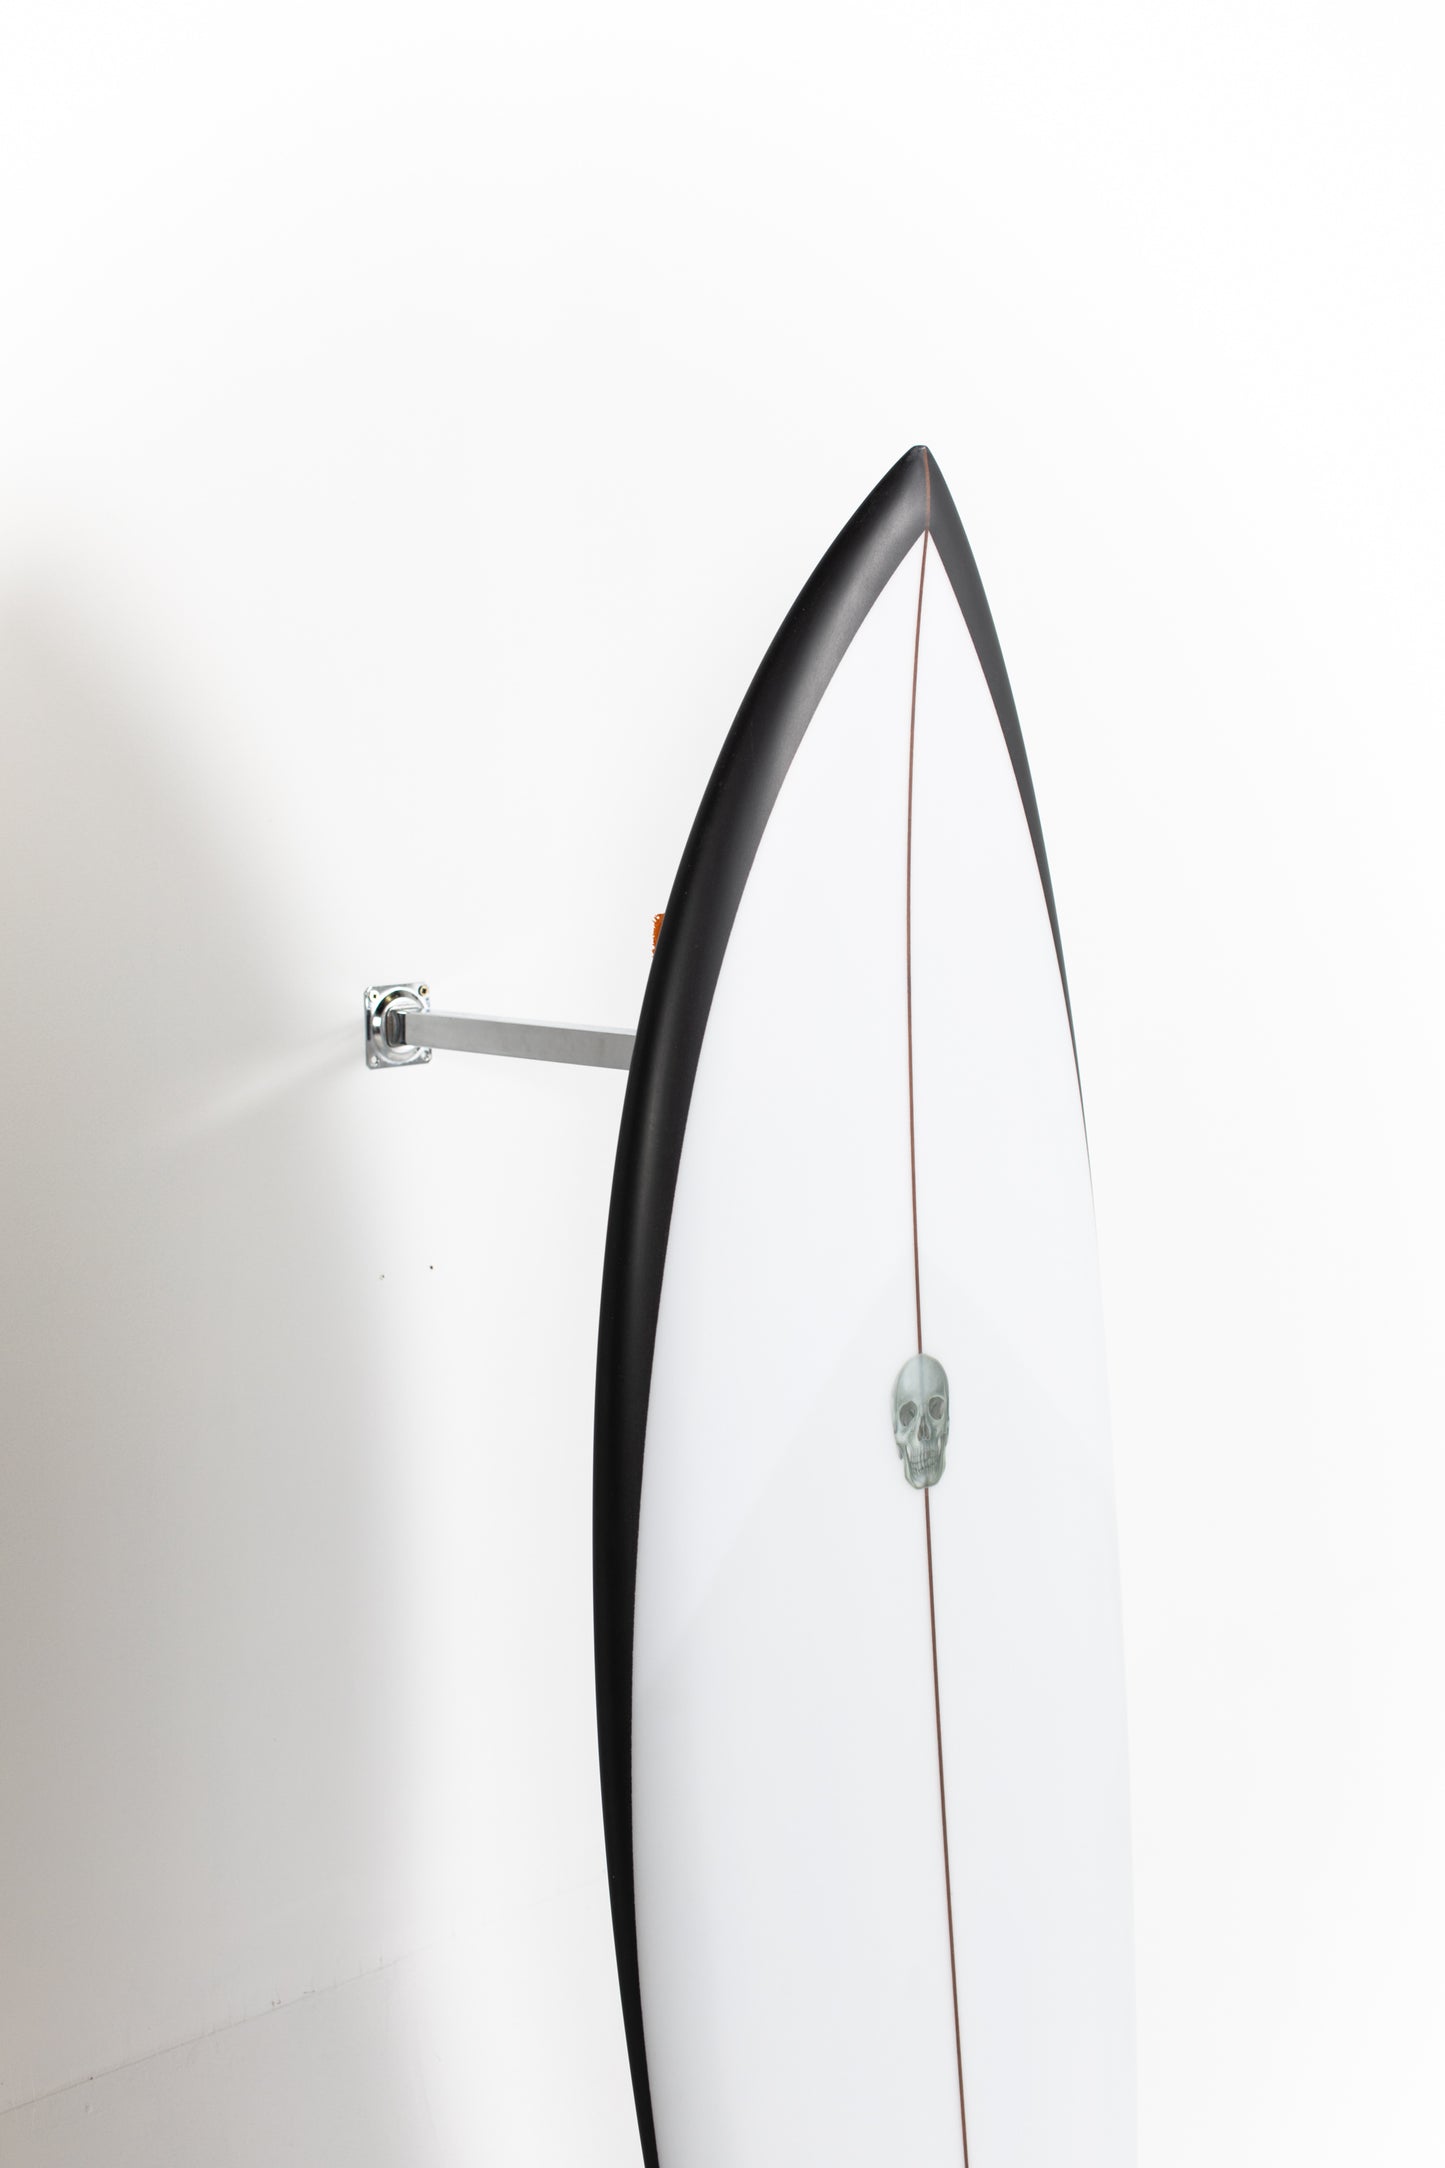 
                  
                    Pukas Surf Shop - Christenson Surfboards - LANE SPLITTER - 5'4" x 19 3/8 x 2 5/16 - CX04564
                  
                